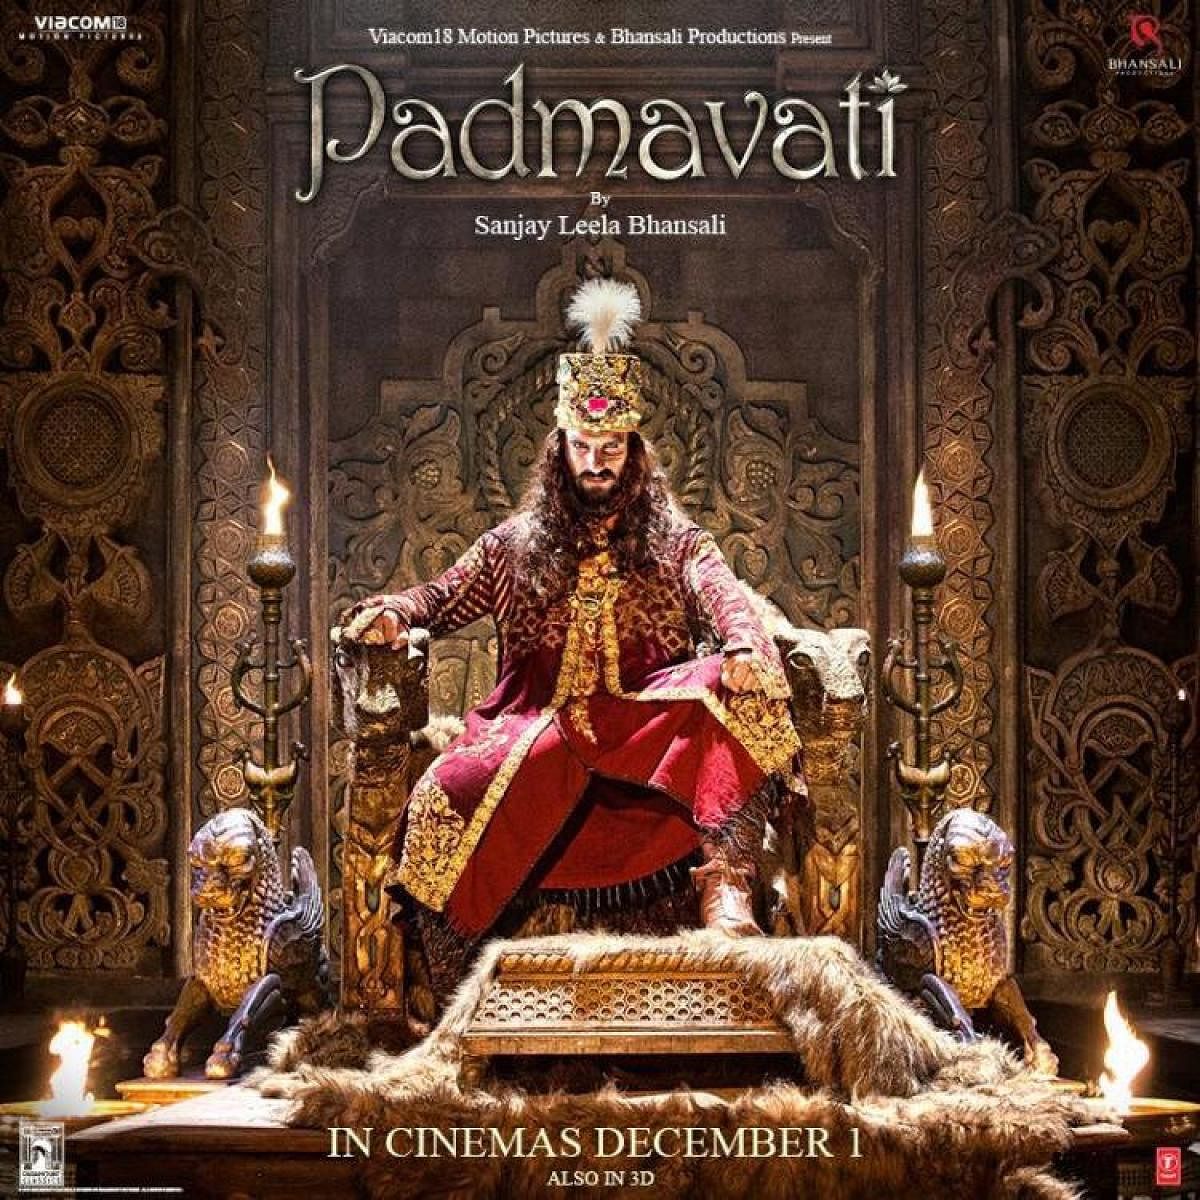 A poster of the movie Padmavati.